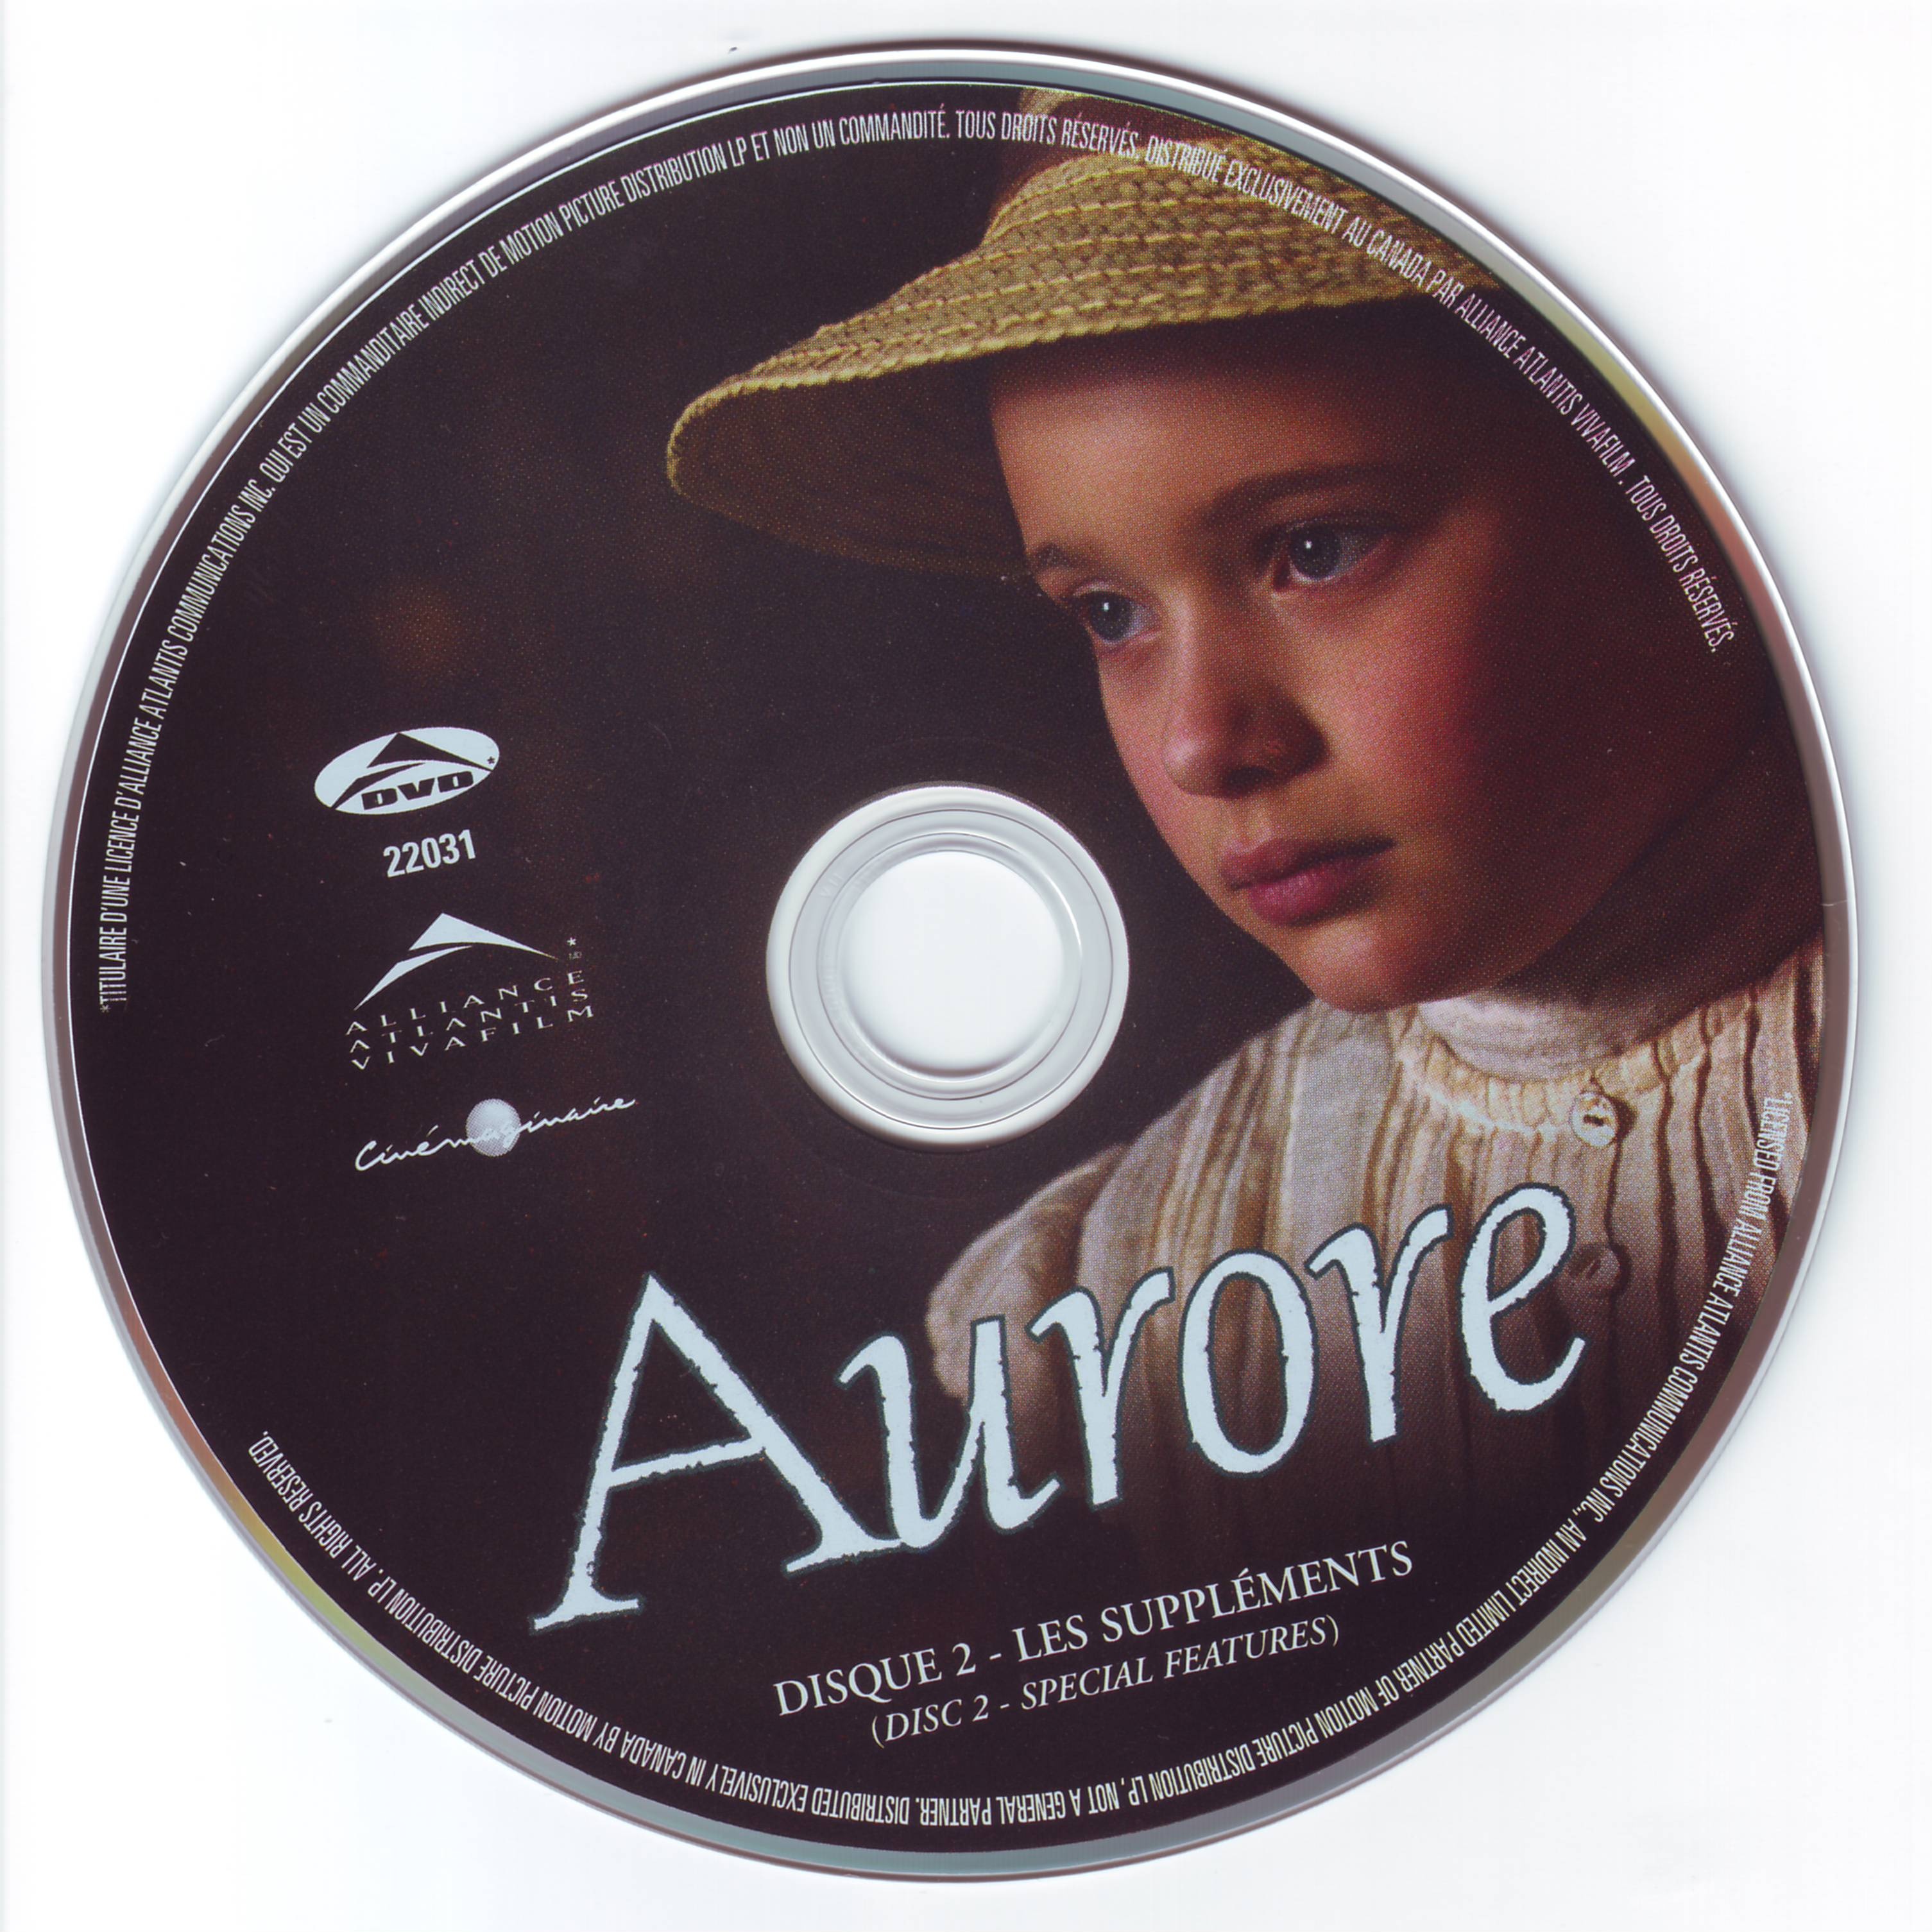 Aurore DISC 2